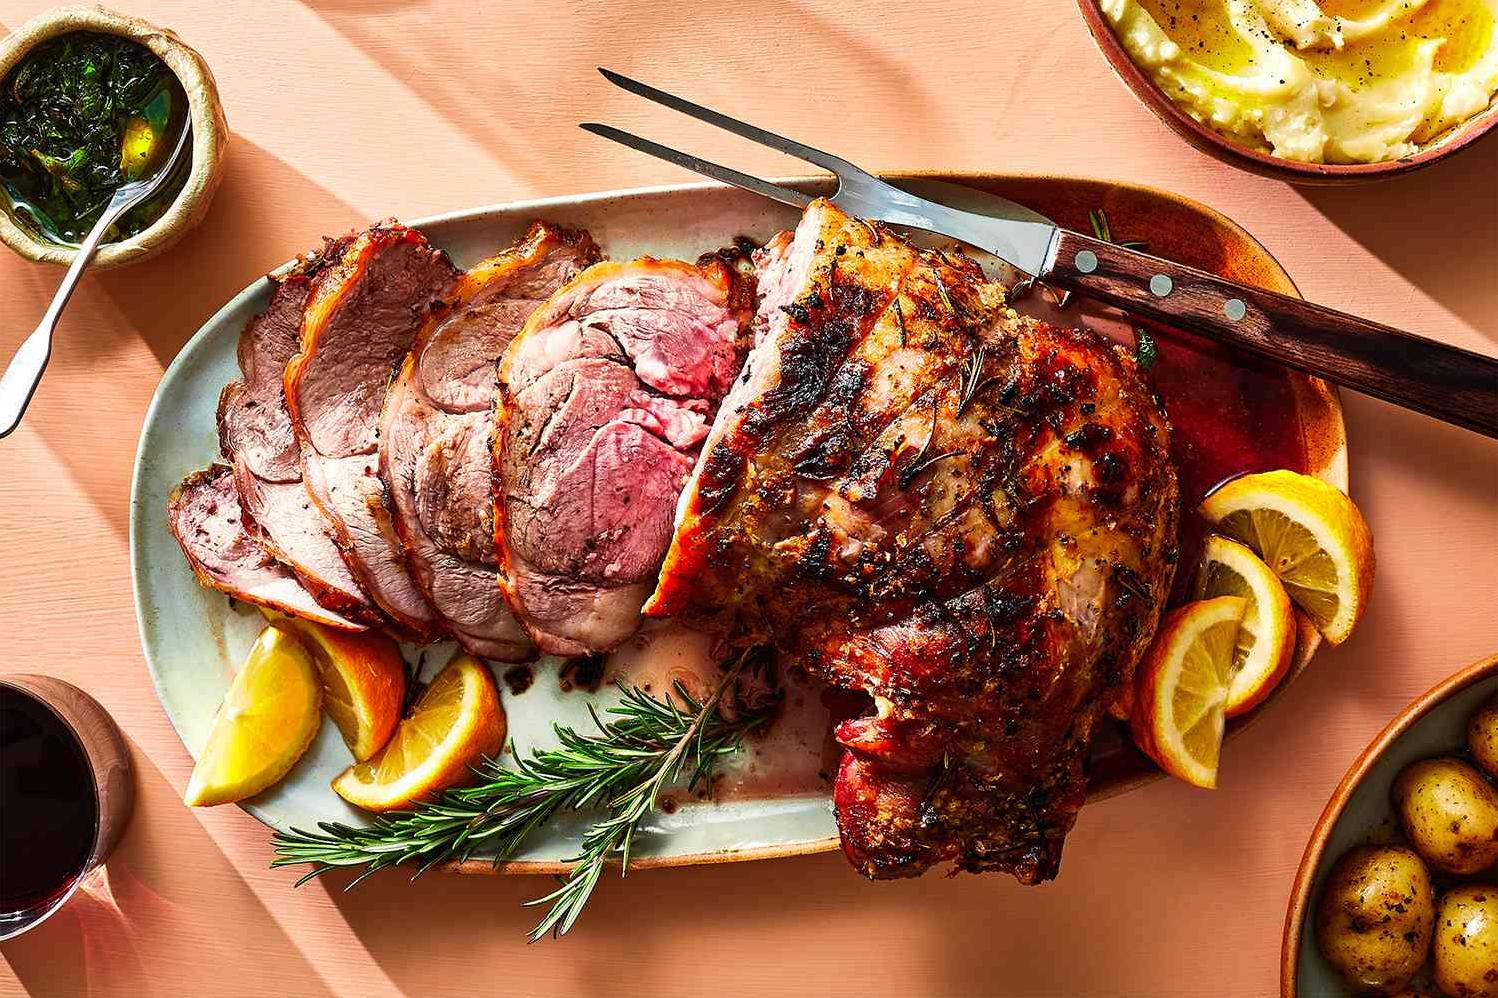  Roast leg of lamb, the king of St. Patrick's Day cuisine